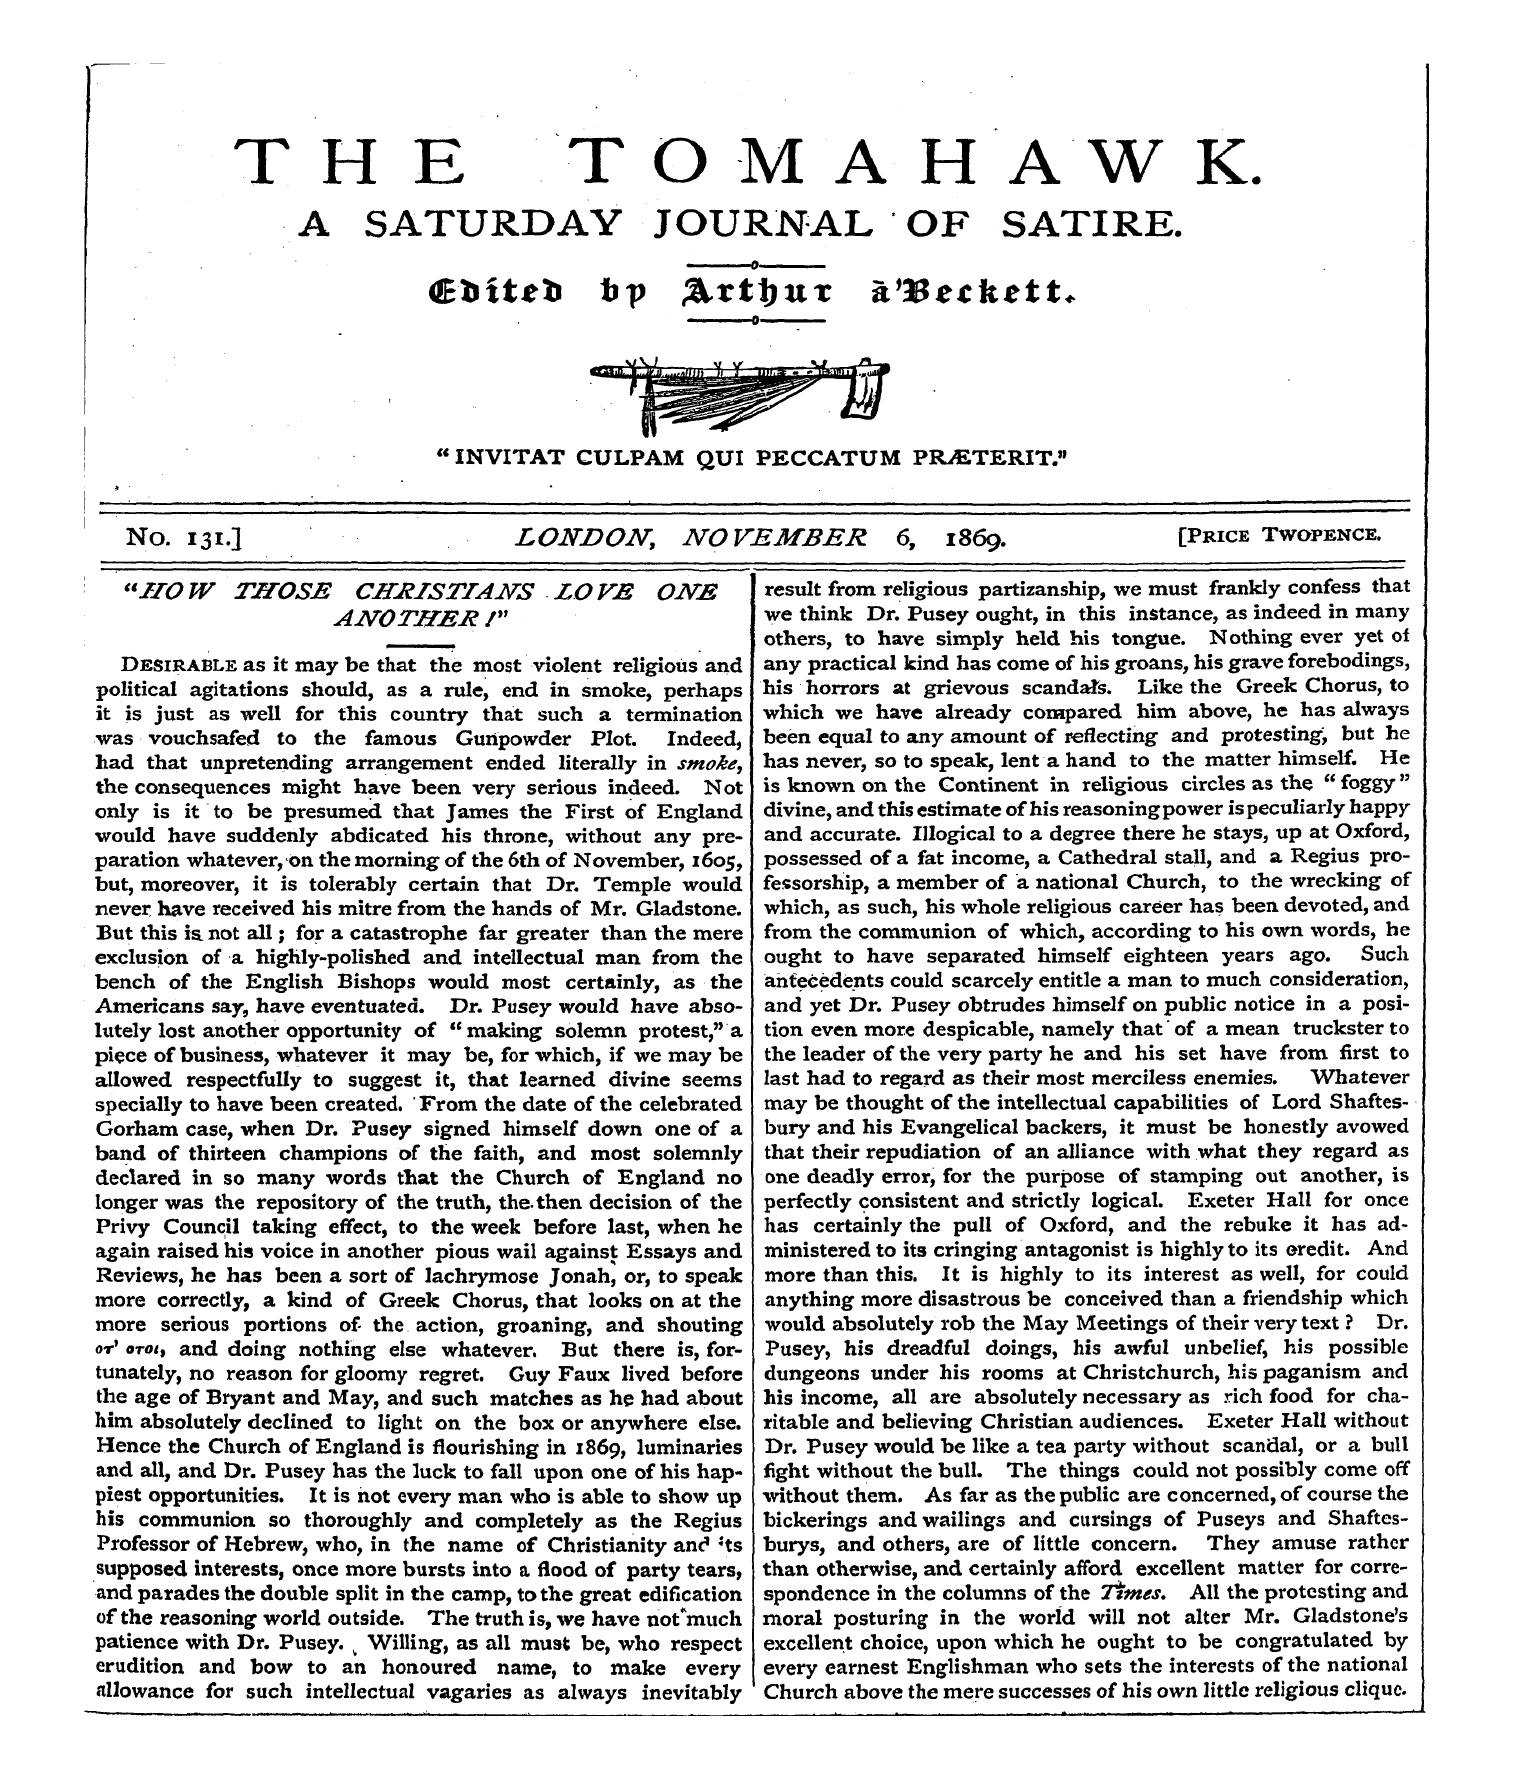 Tomahawk (1867-1870): jS F Y, 1st edition - "Iio W Those Citjilstiajsrs Lo Ve One Anotherr